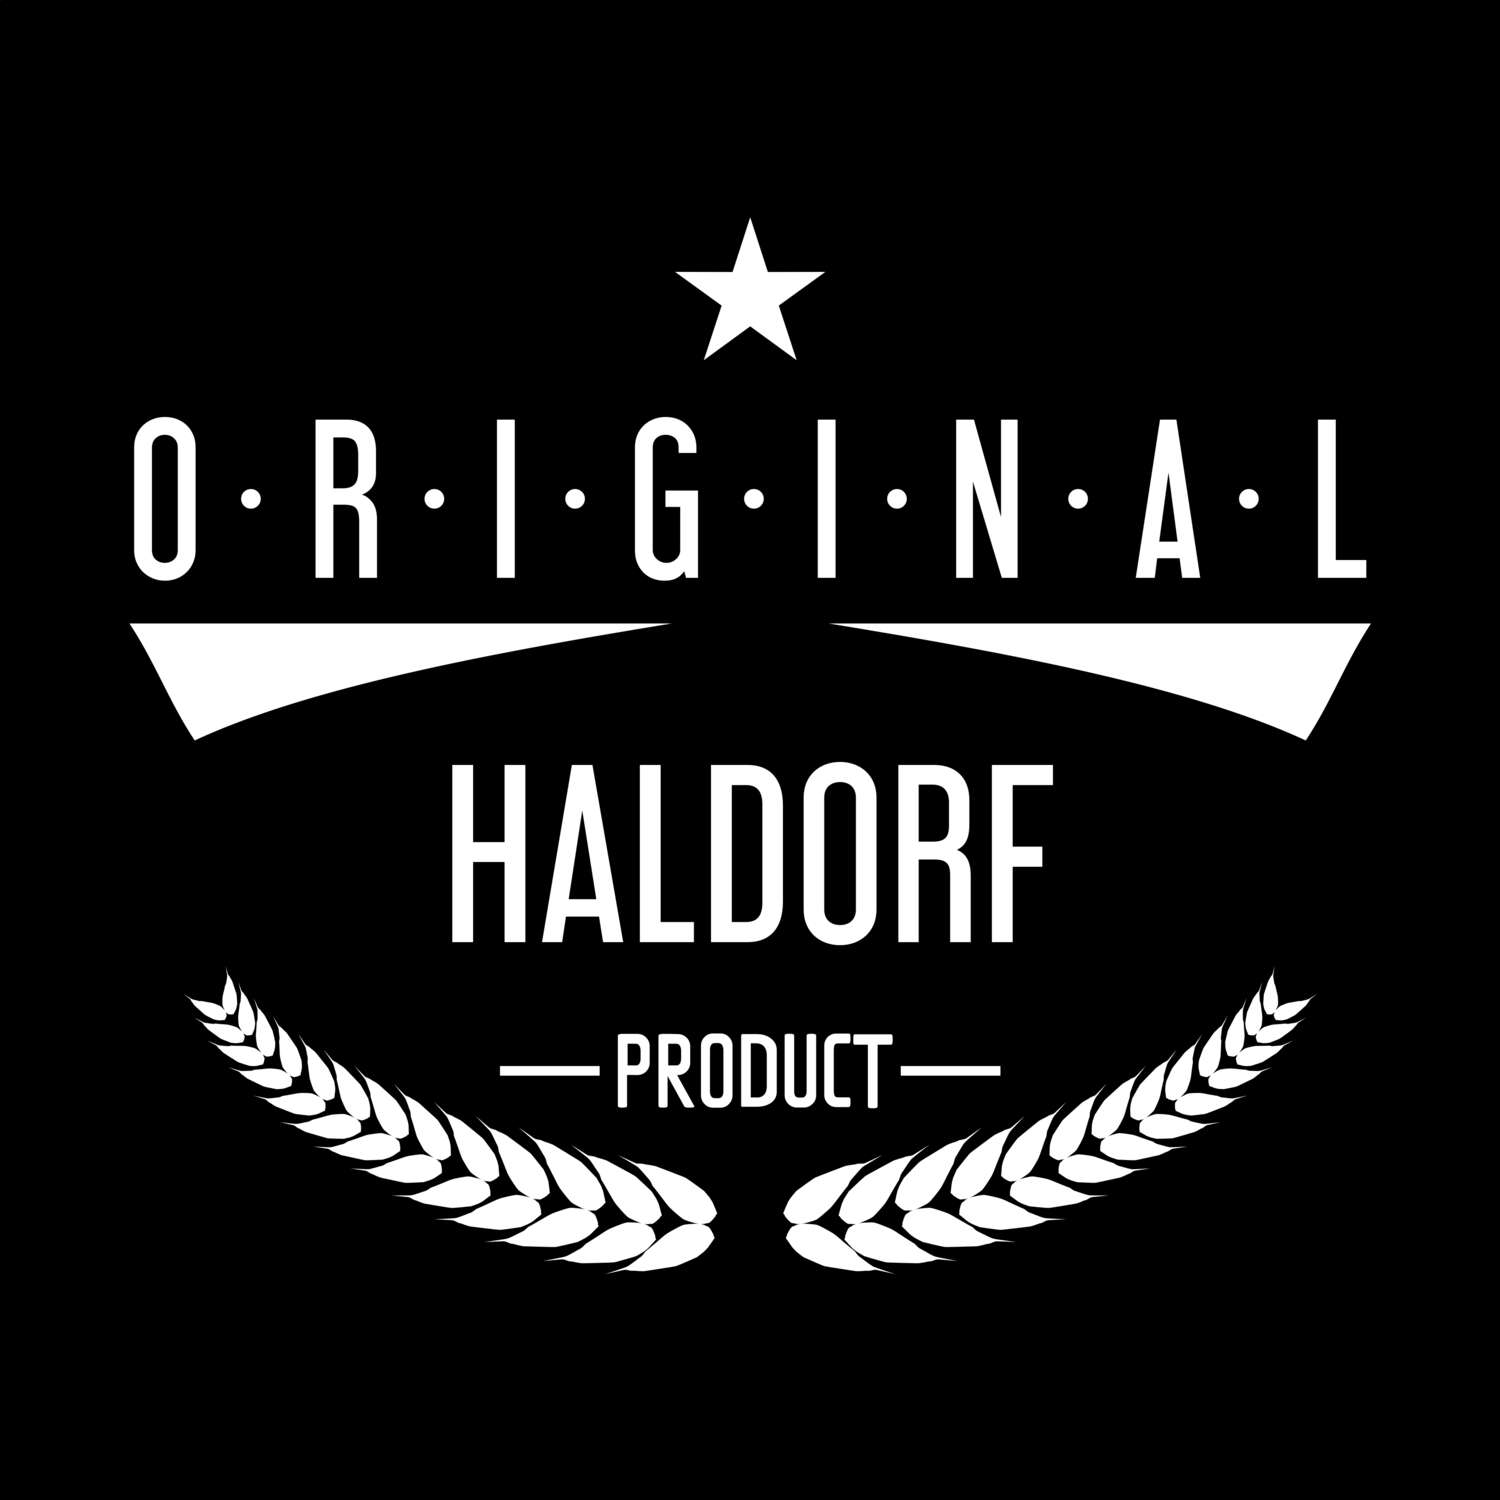 Haldorf T-Shirt »Original Product«